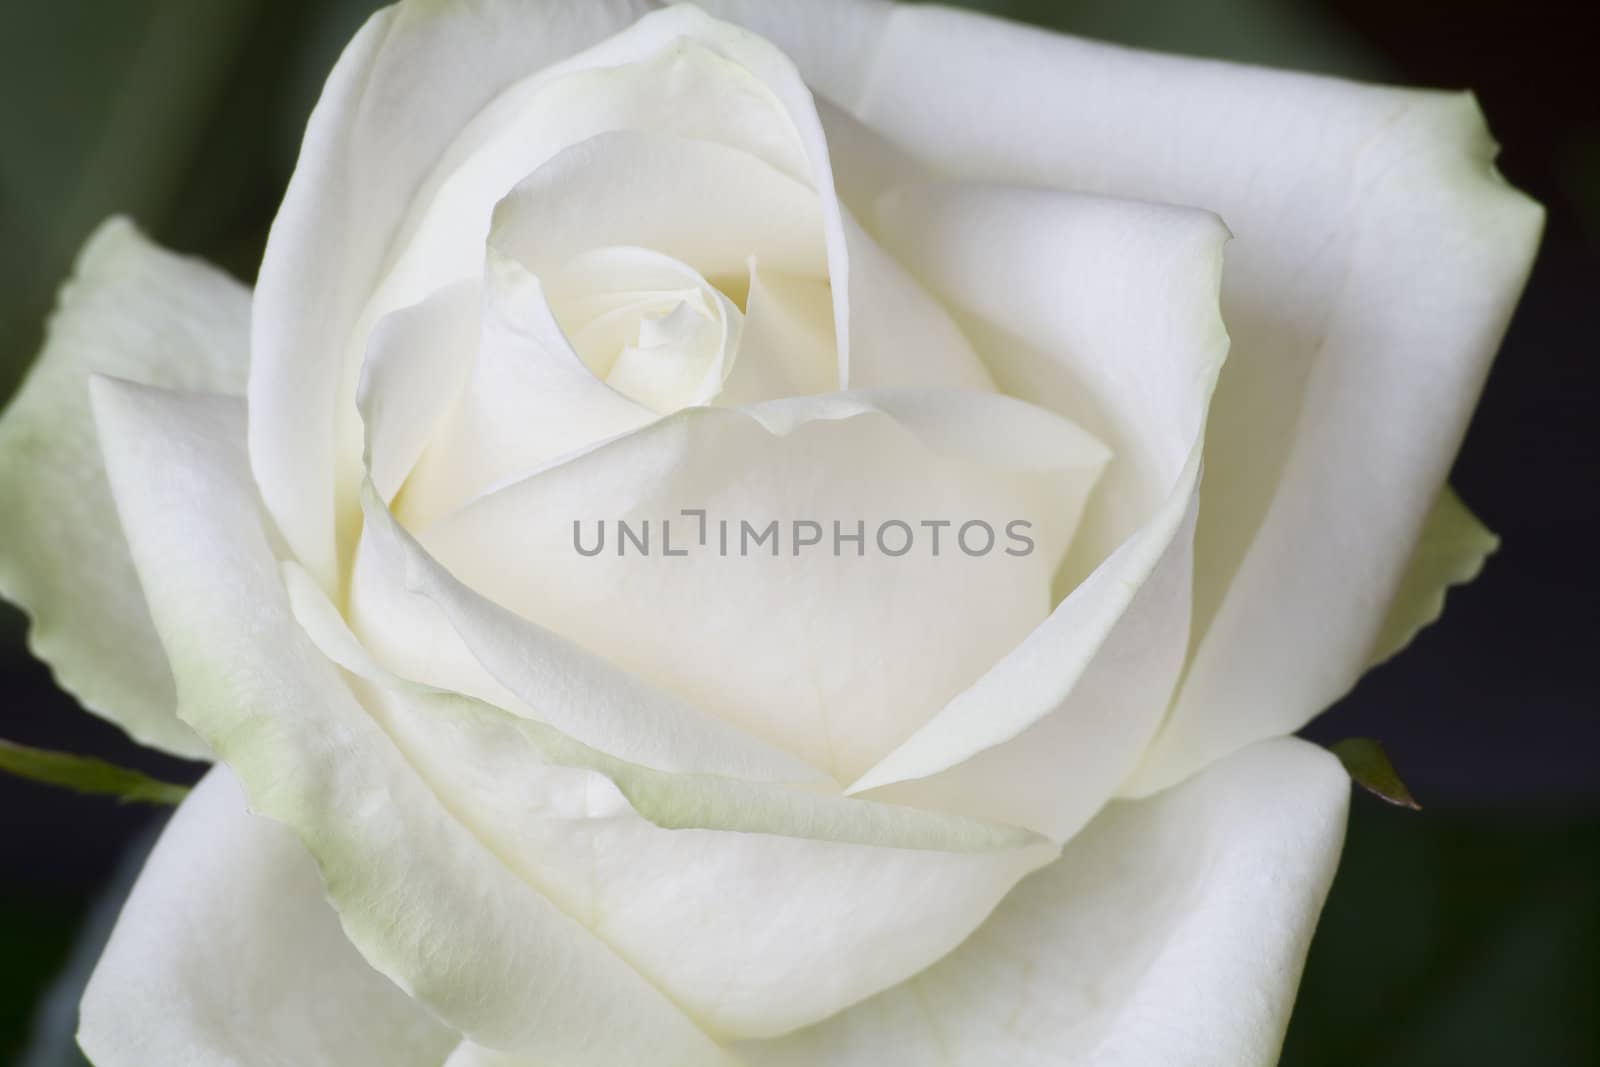 In a garden very beautiful white rose grew